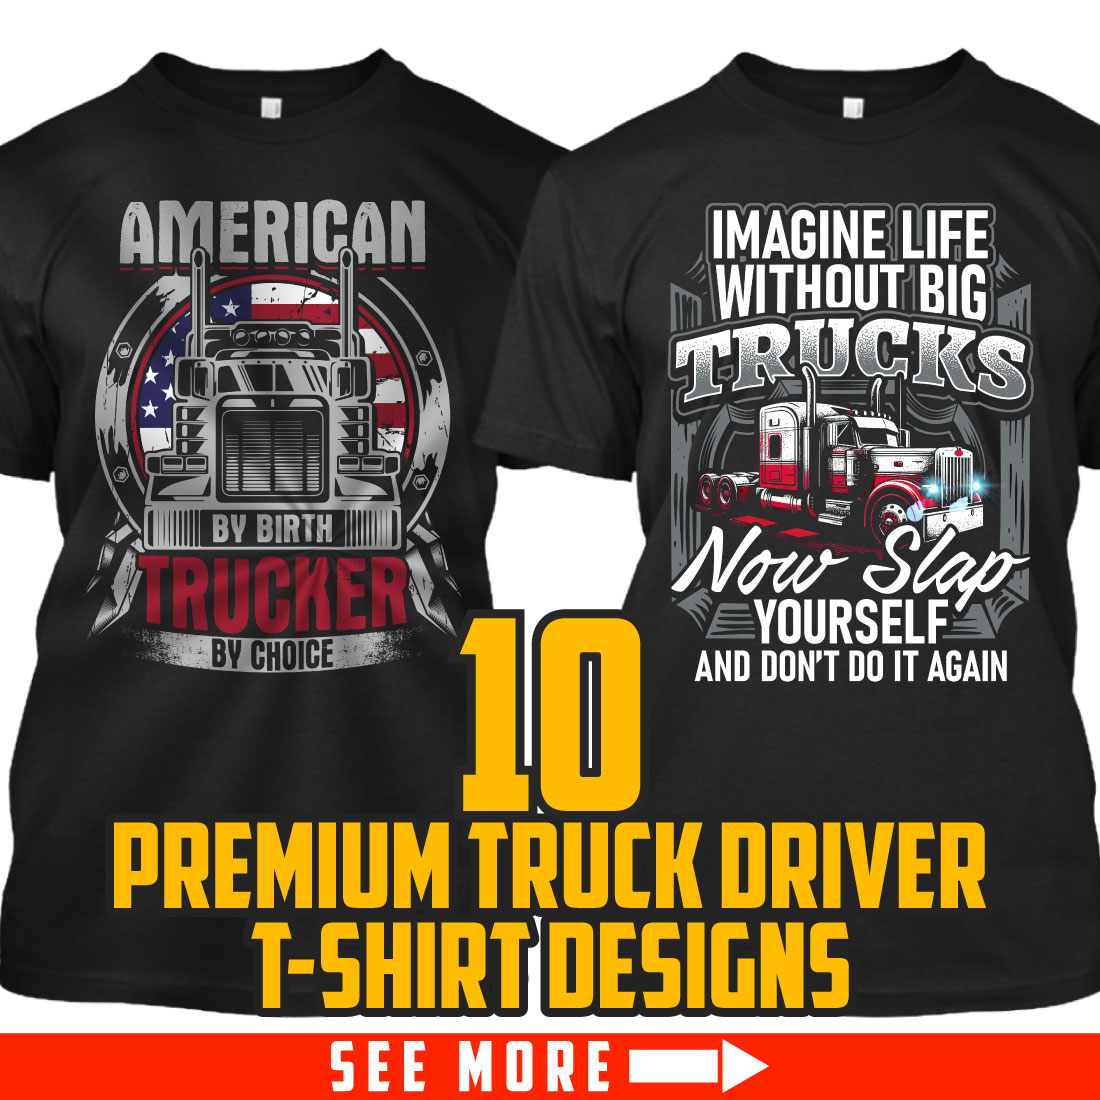 Truck driver t shirt design bundle cover image.